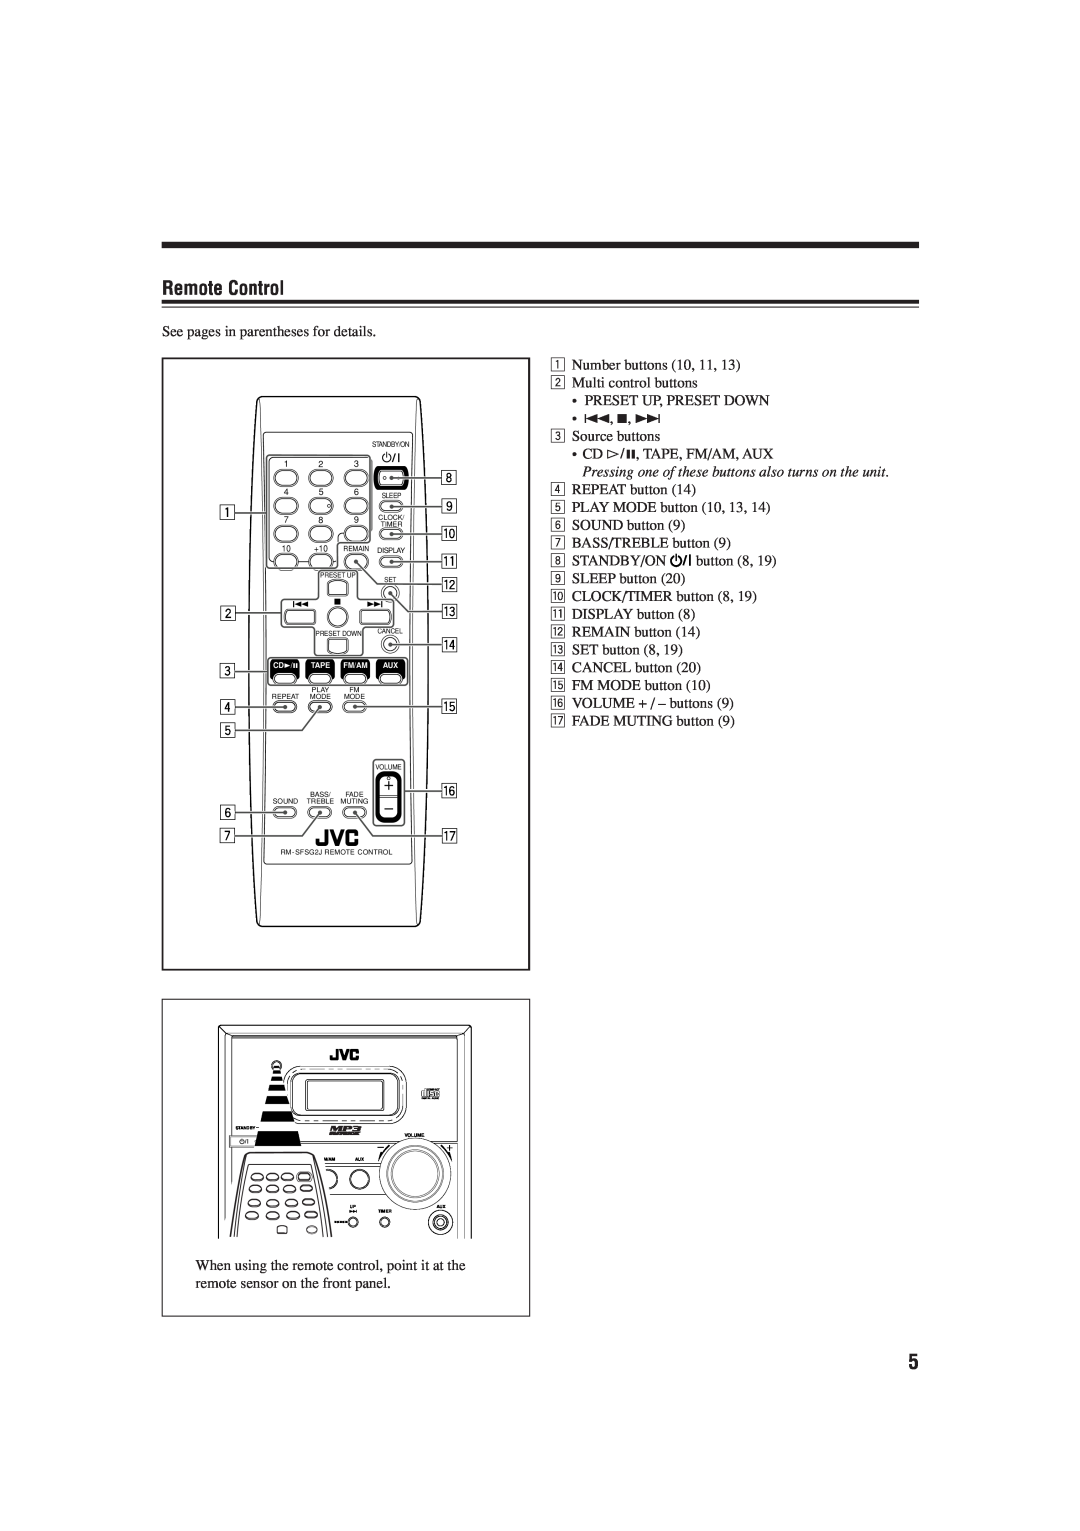 JVC FS-G2 manual Remote Control 